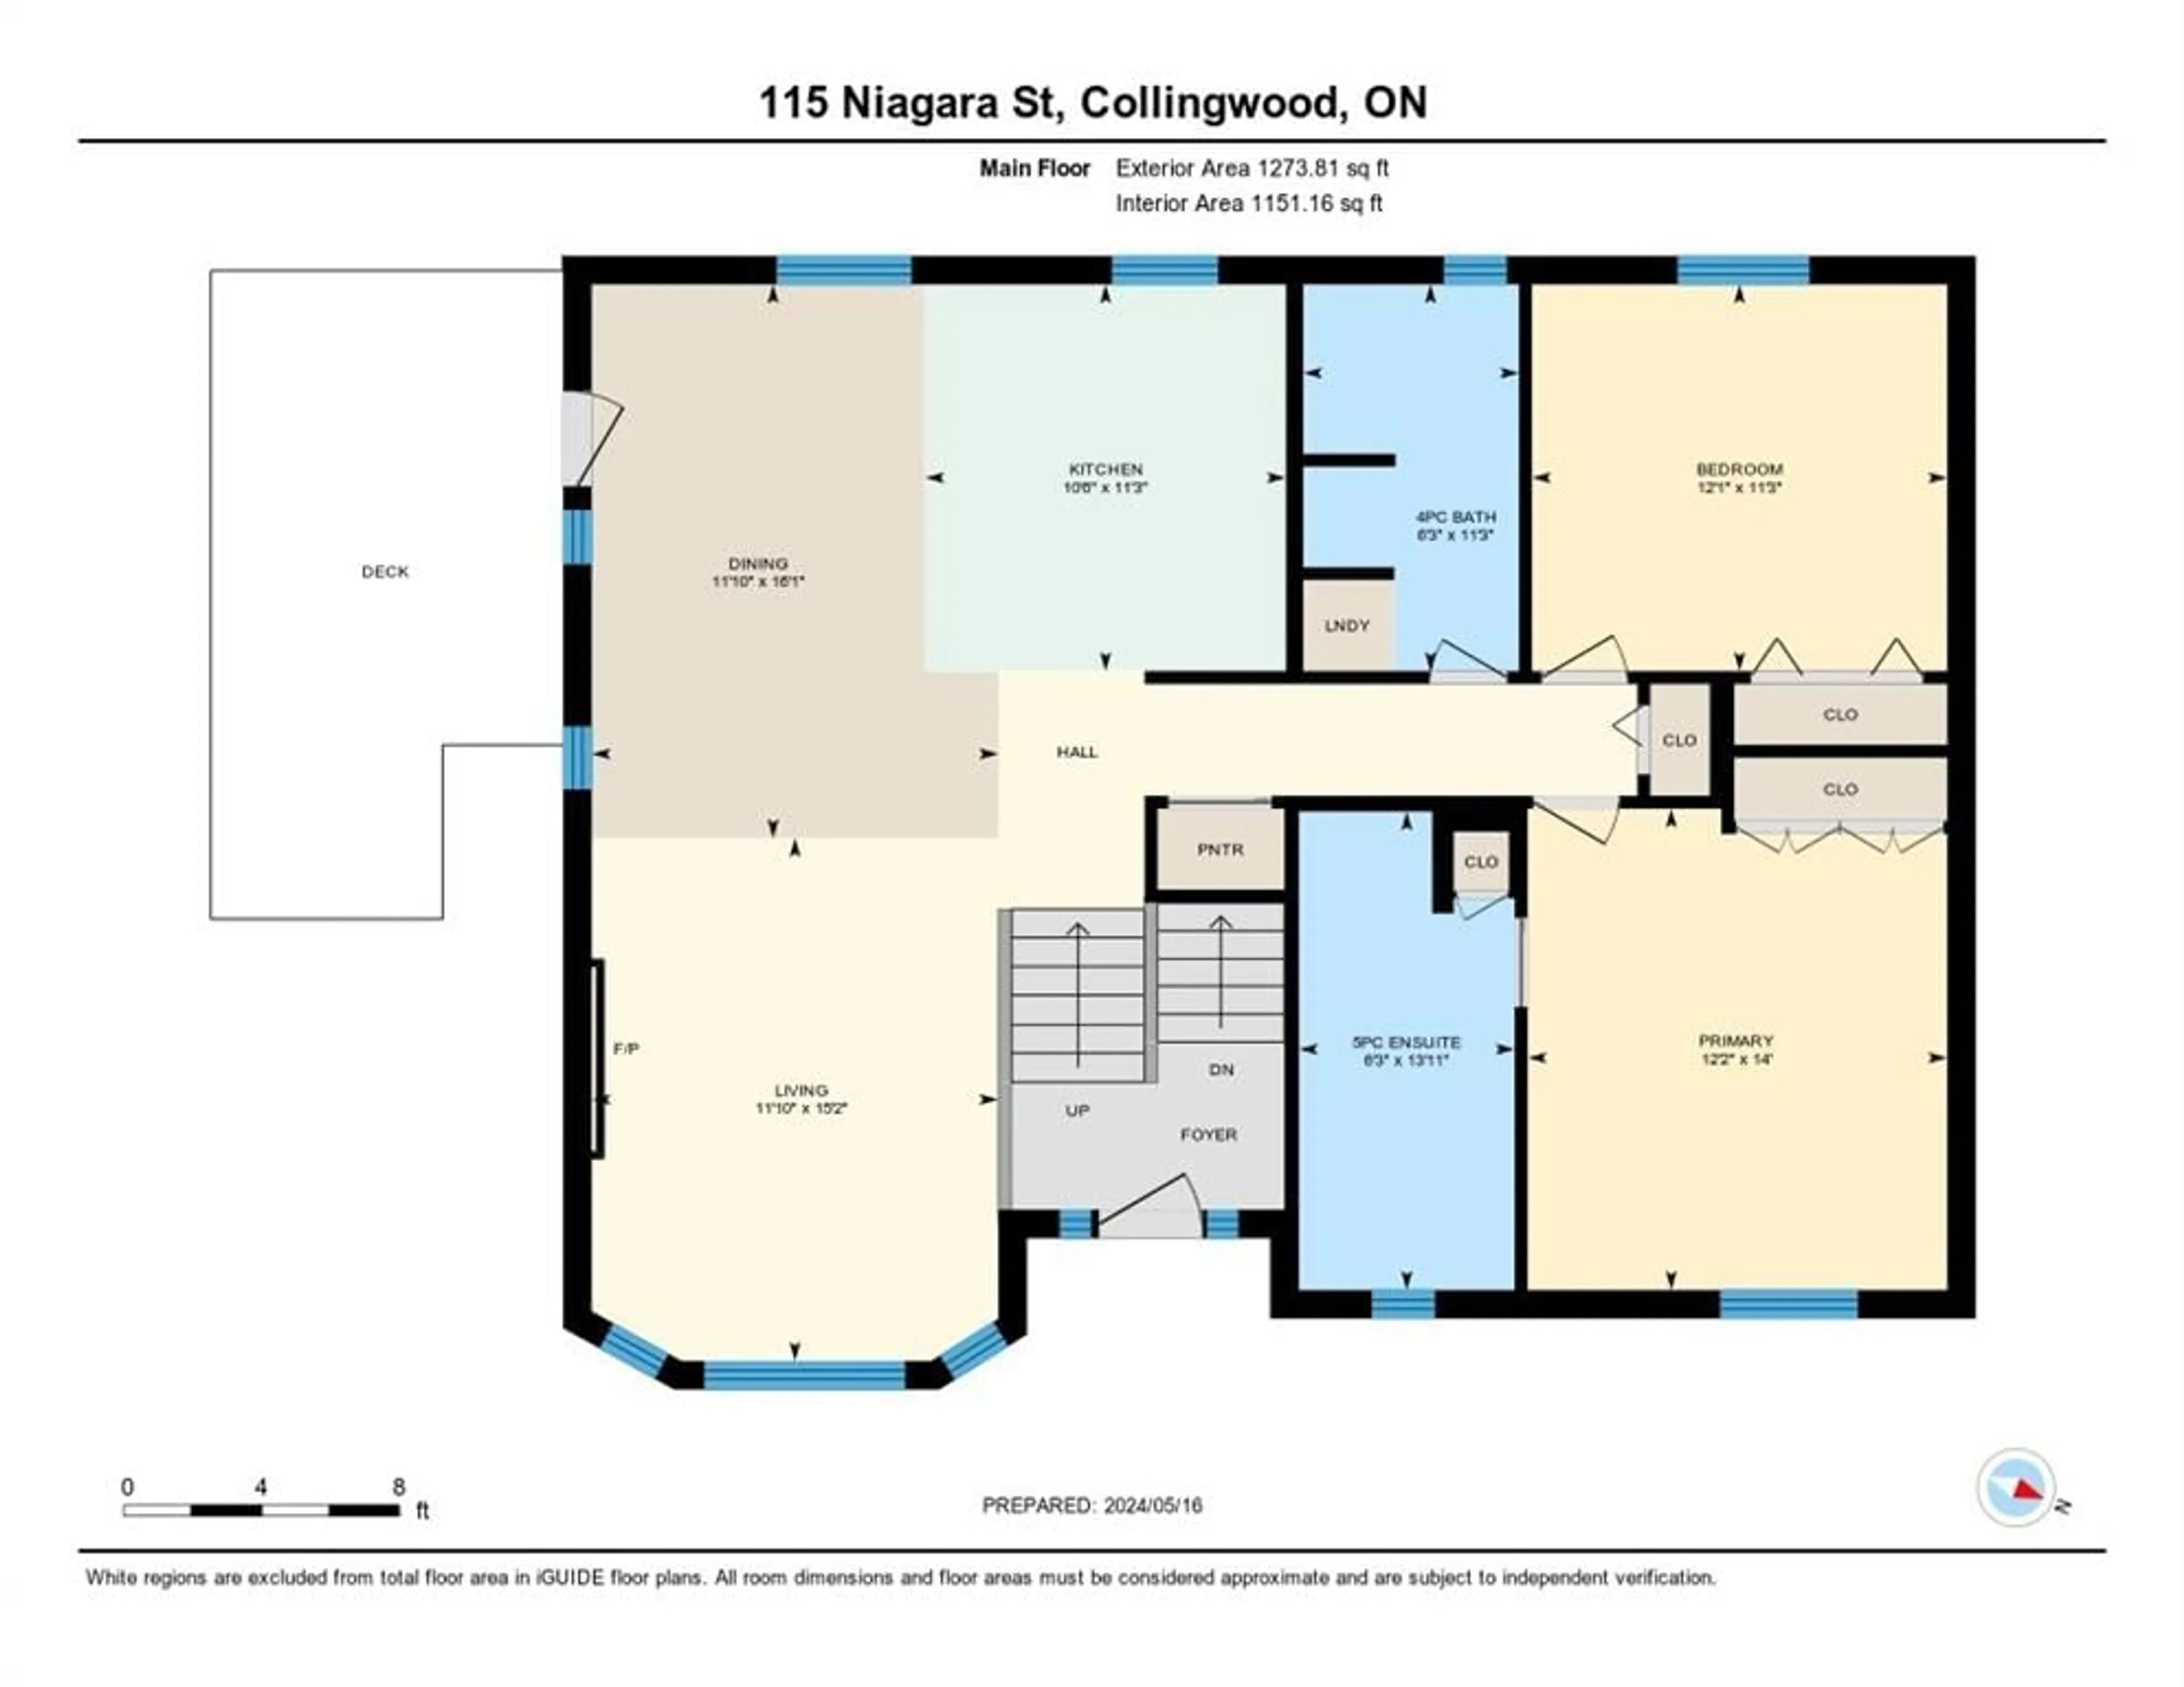 Floor plan for 115 Niagara St, Collingwood Ontario L9Y 3X5